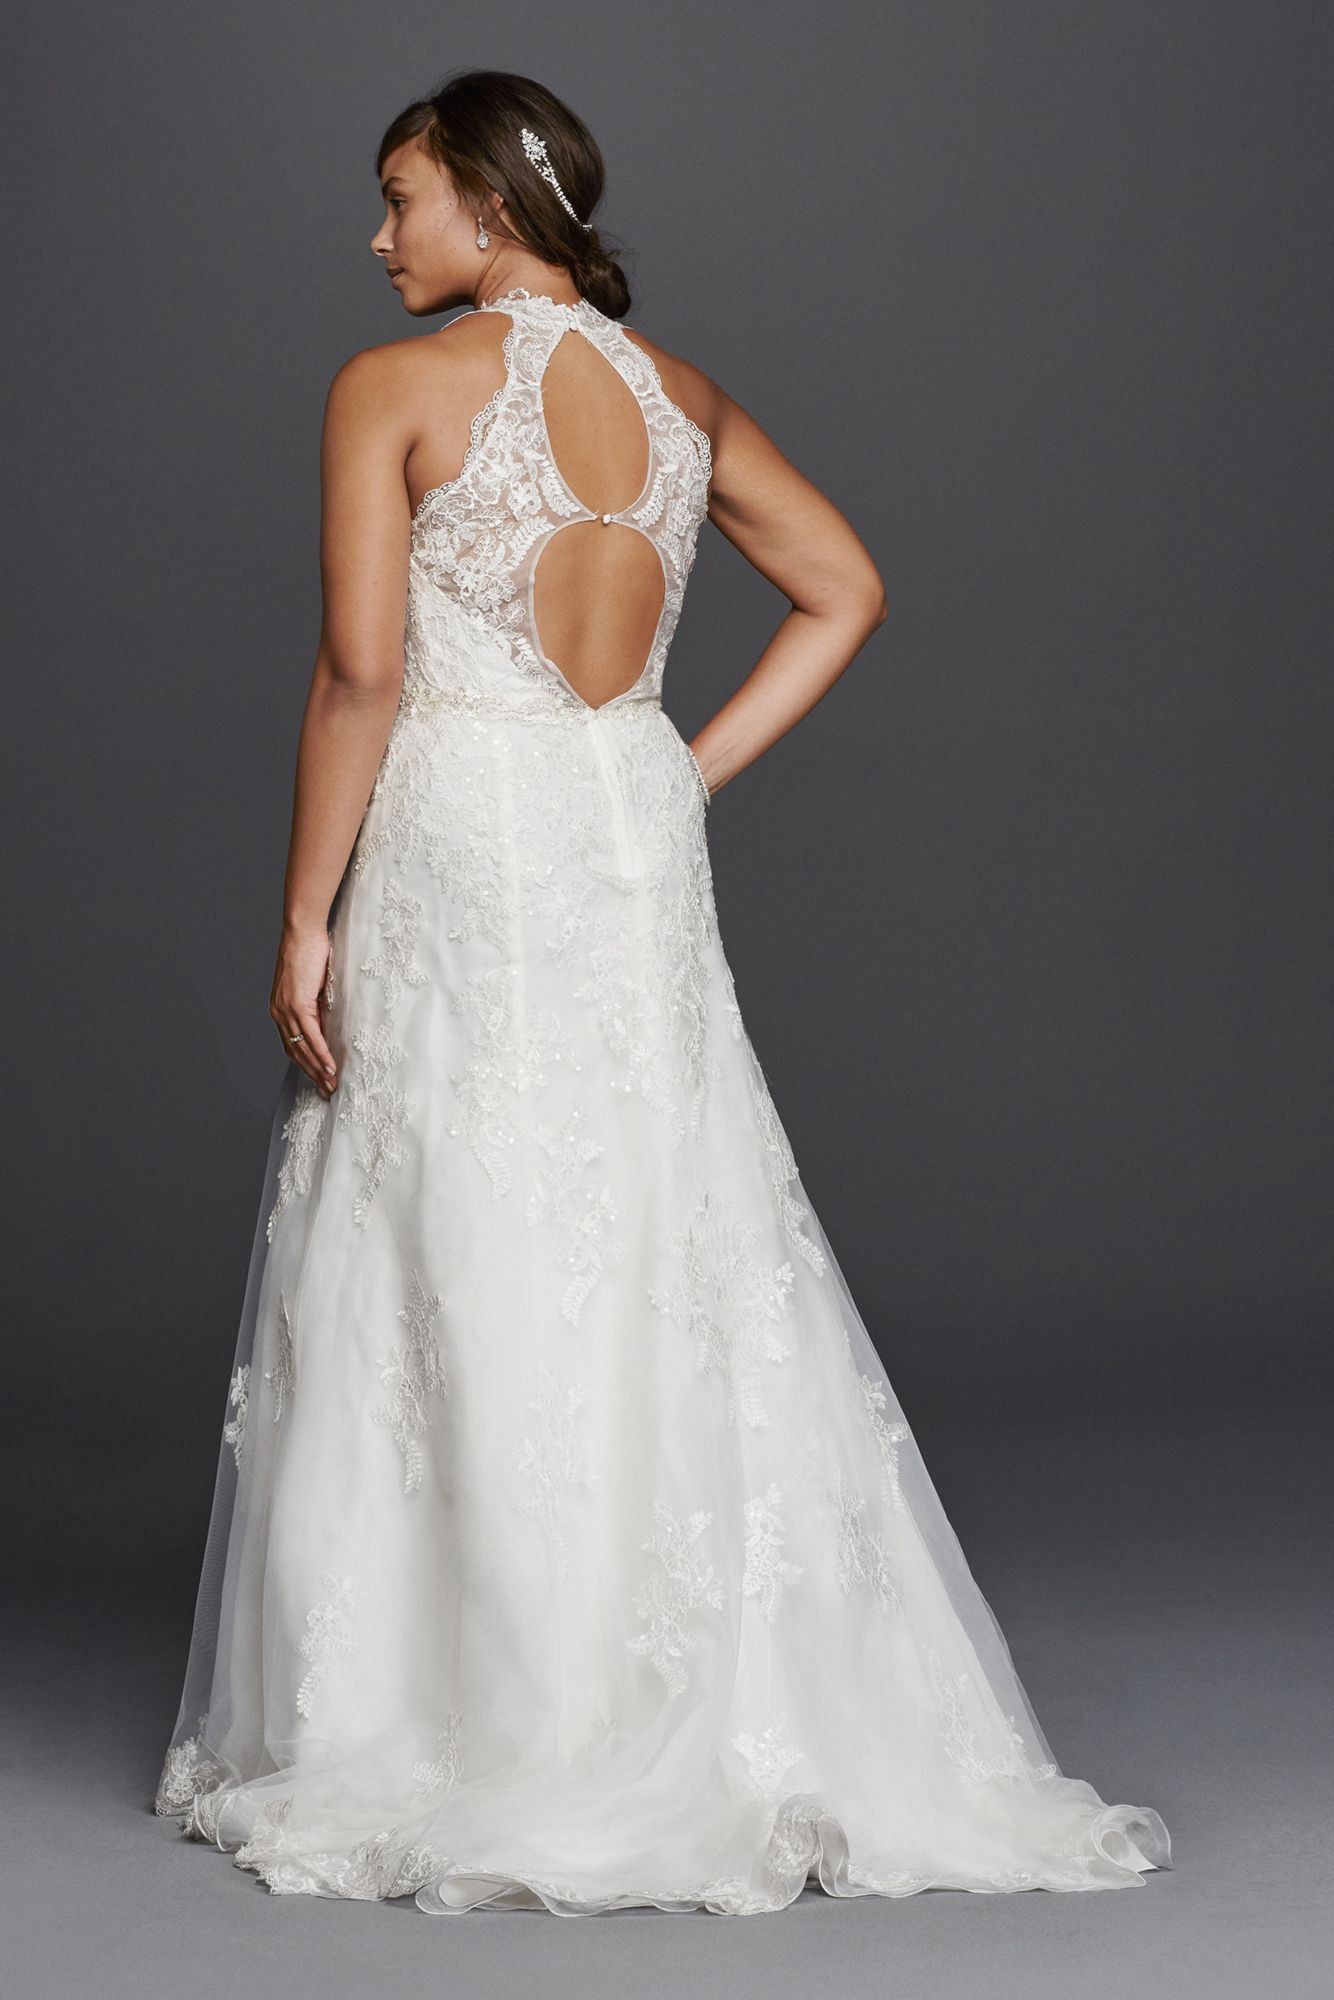 Halter Wedding Gowns
 Jewel Lace Plus Size Halter Wedding Dress Style 9WG3799